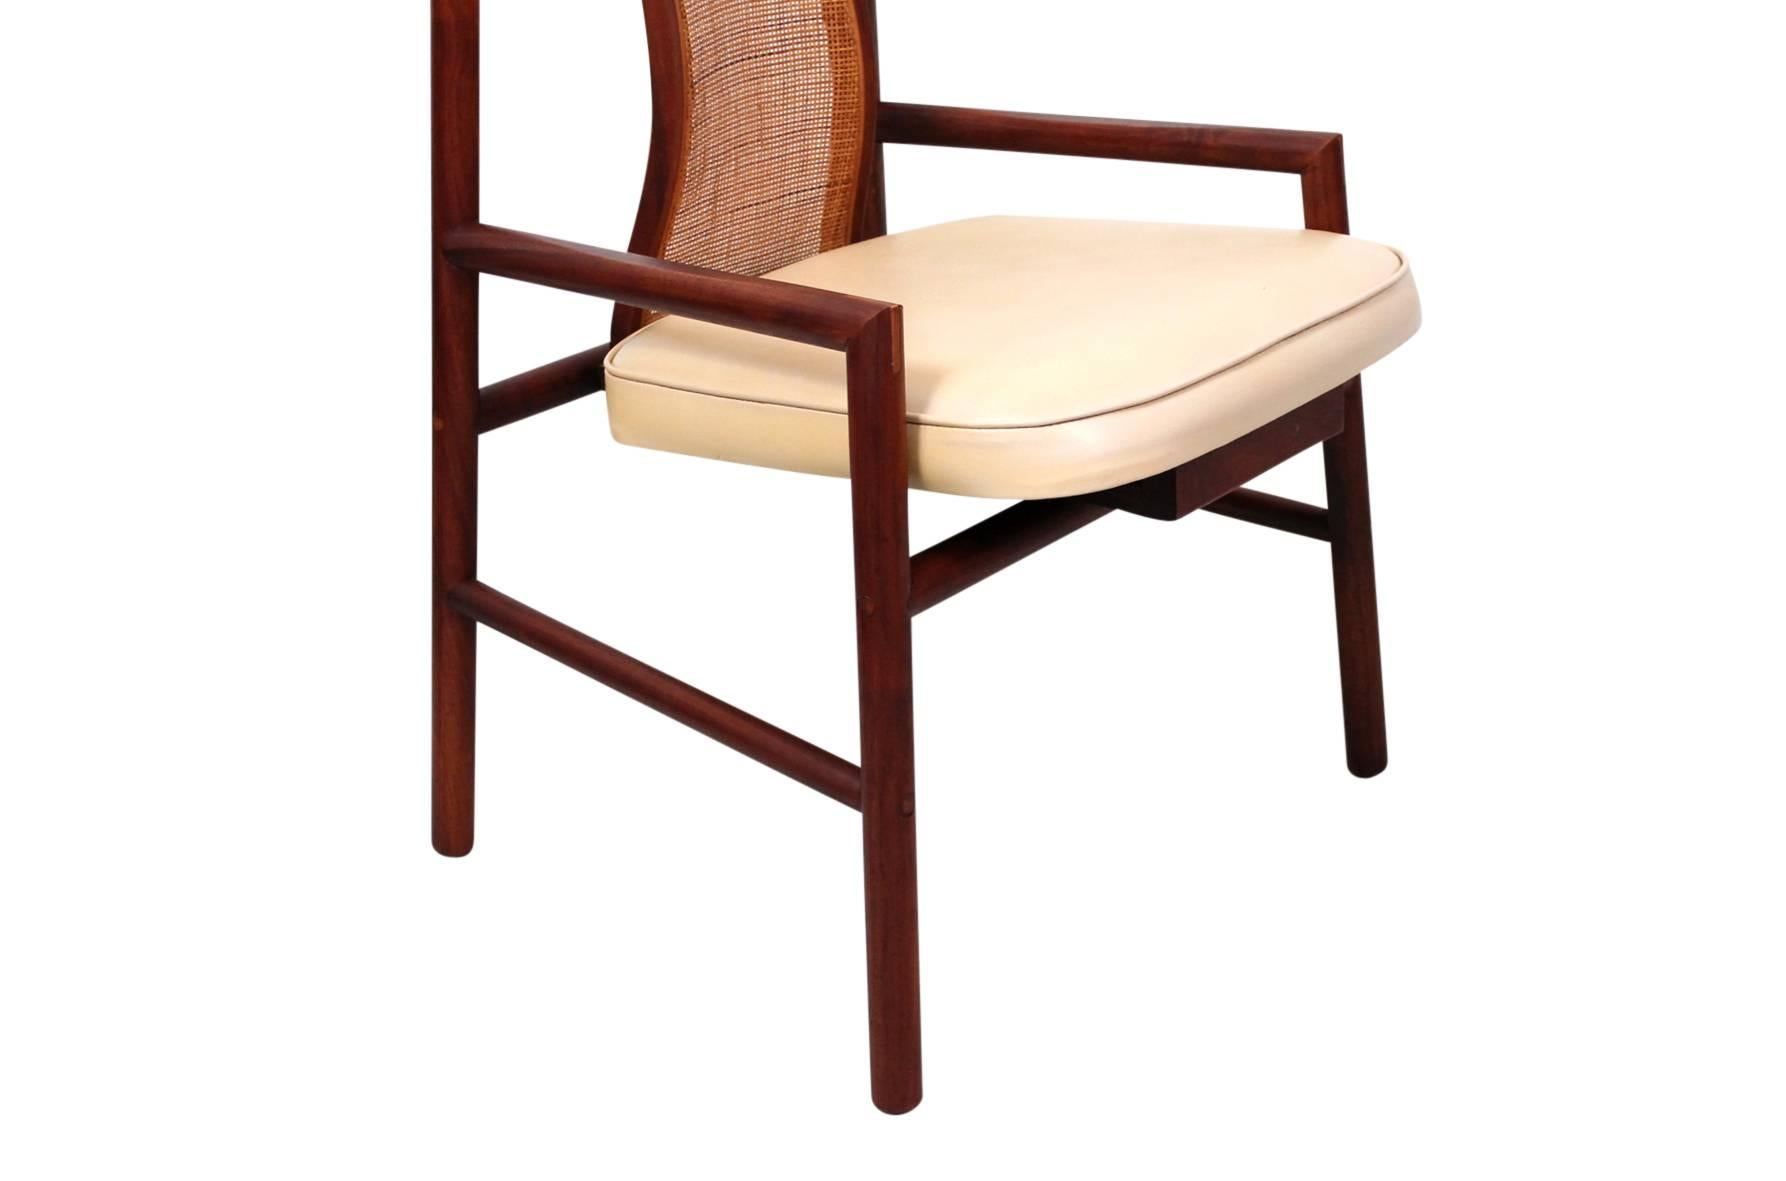 Mid-20th Century Rare John Kapel for Glenn Pair of Chairs